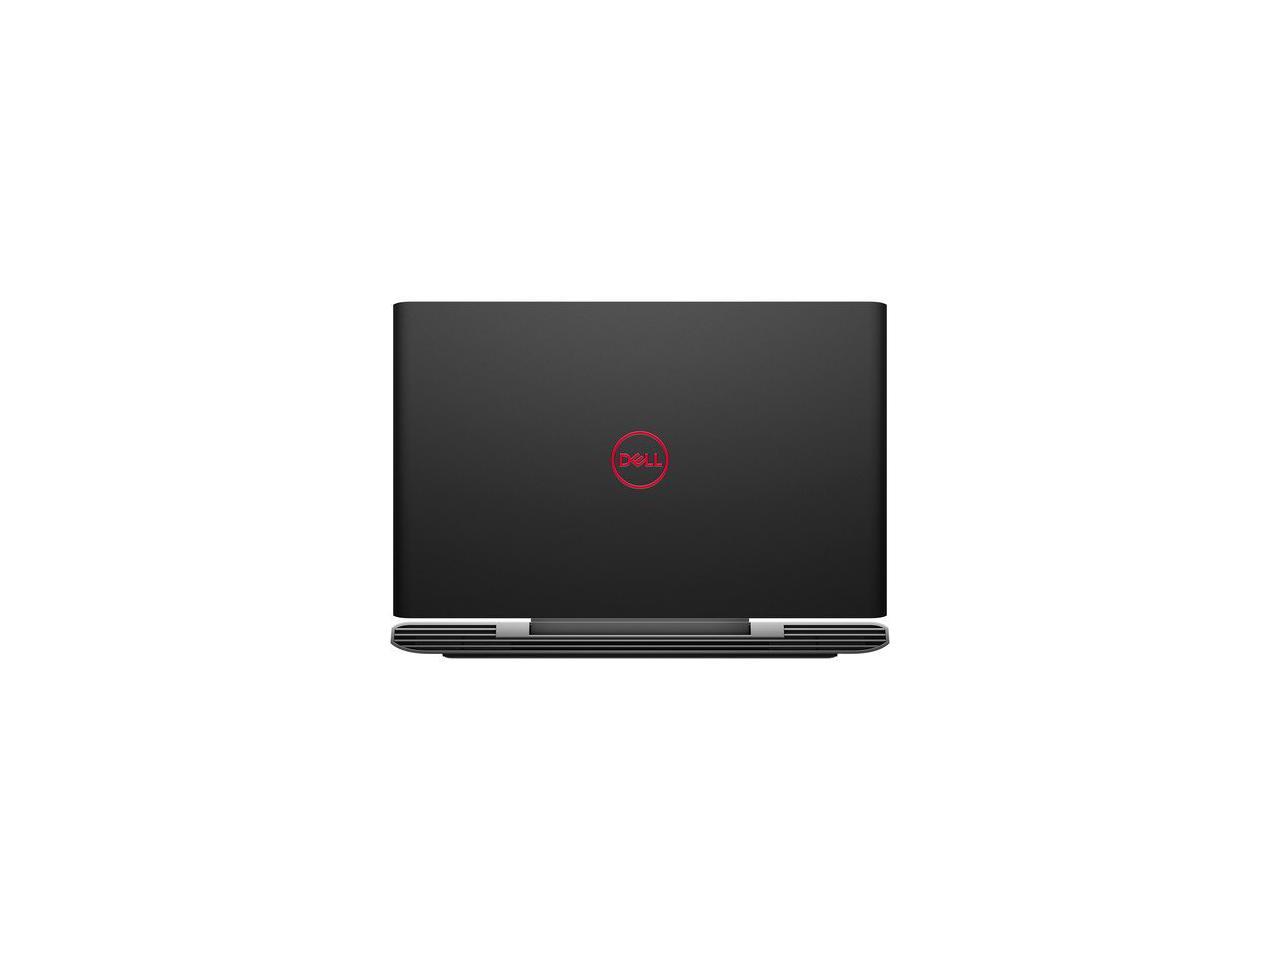 Dell Inspiron 7000 15.6" IPS FHD Gaming Laptop | VR Ready | Intel Quad Core i5-7300HQ | 8GB RAM 1024GB SSD | NVIDIA GeForce GTX 1060 6GB GDDR5 | Windows 10 Black